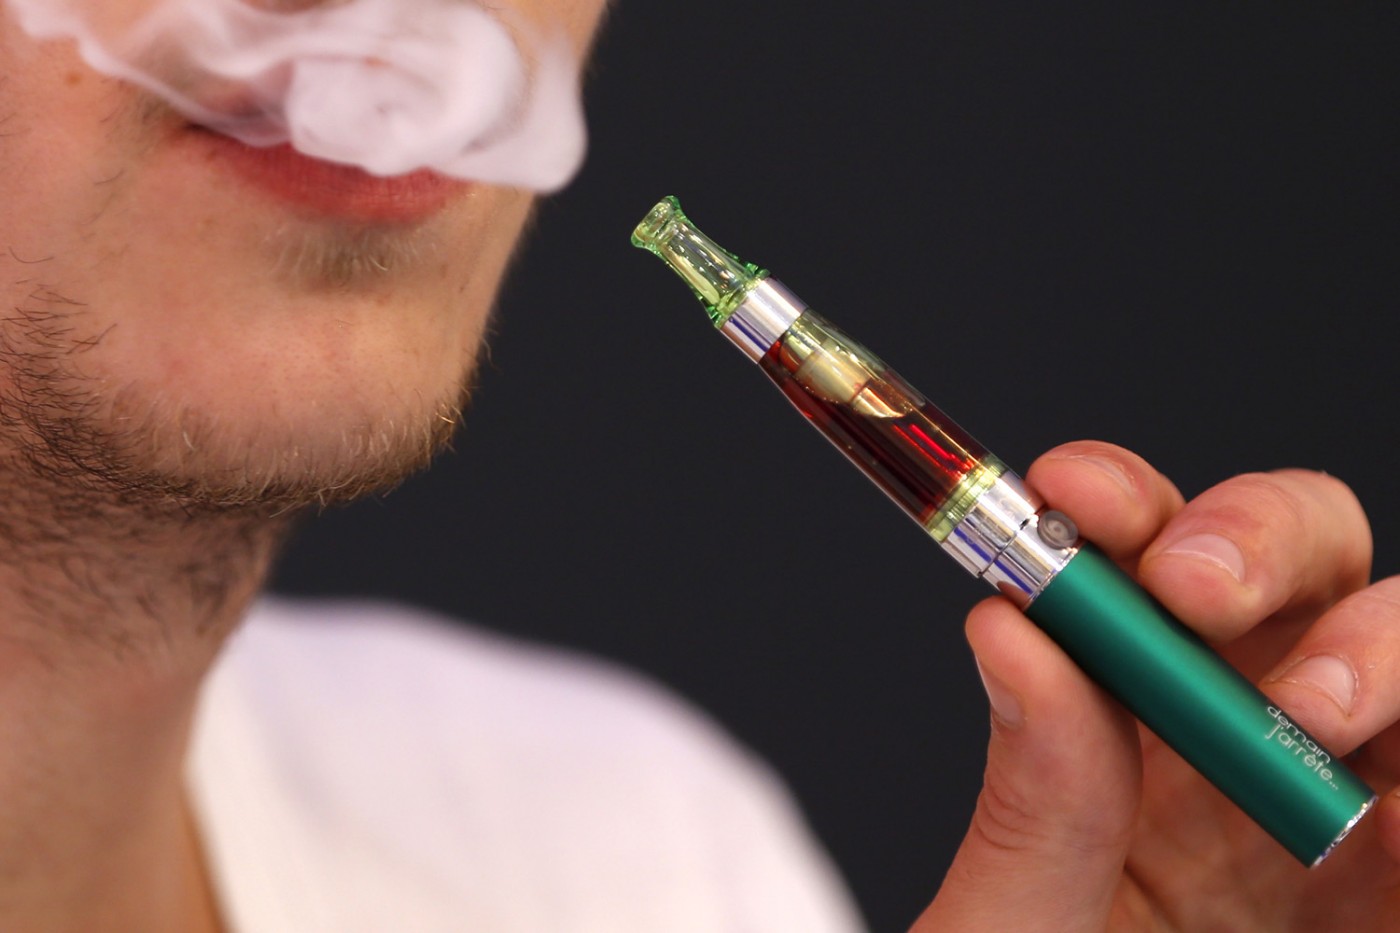 Investigation Reveals E-cigarette Liquid Contains Lung Disease-Causing Chemical